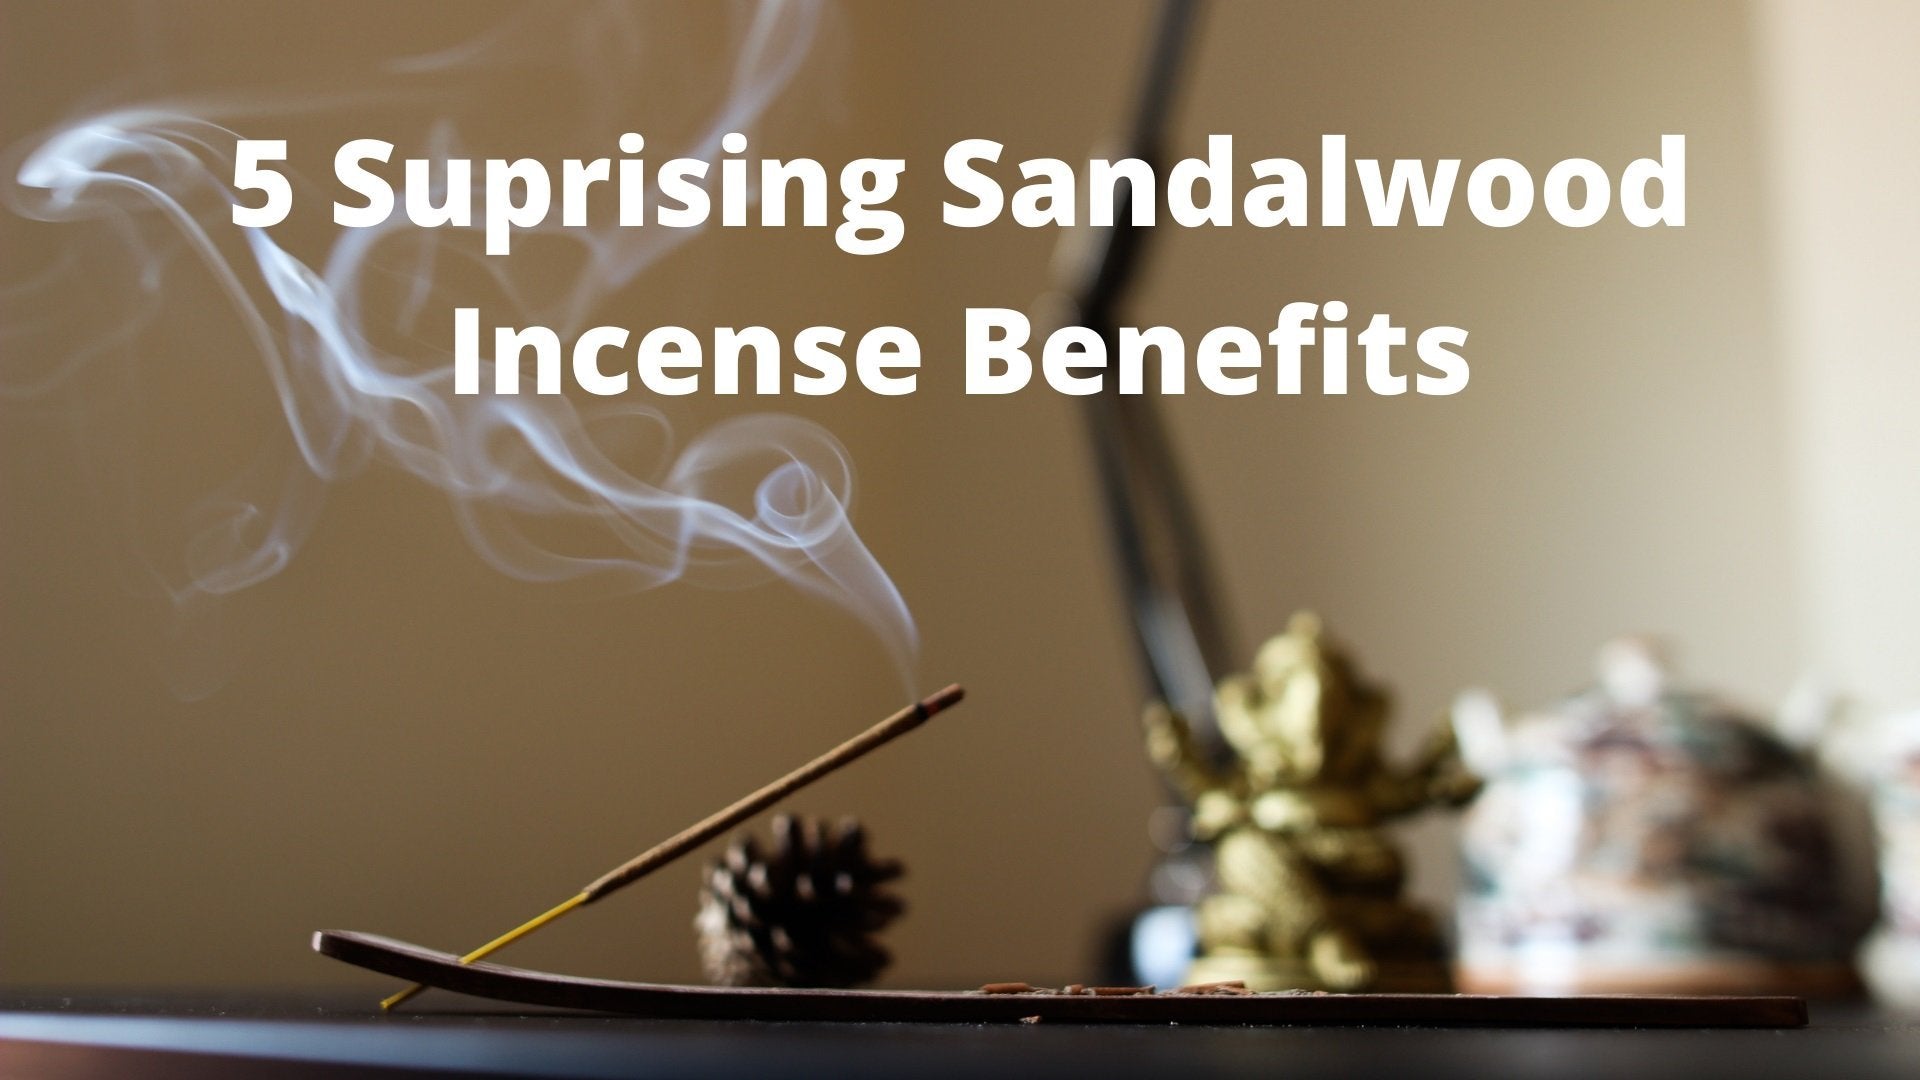 5 Suprising Sandalwood Incense Benefits - The Hippie House